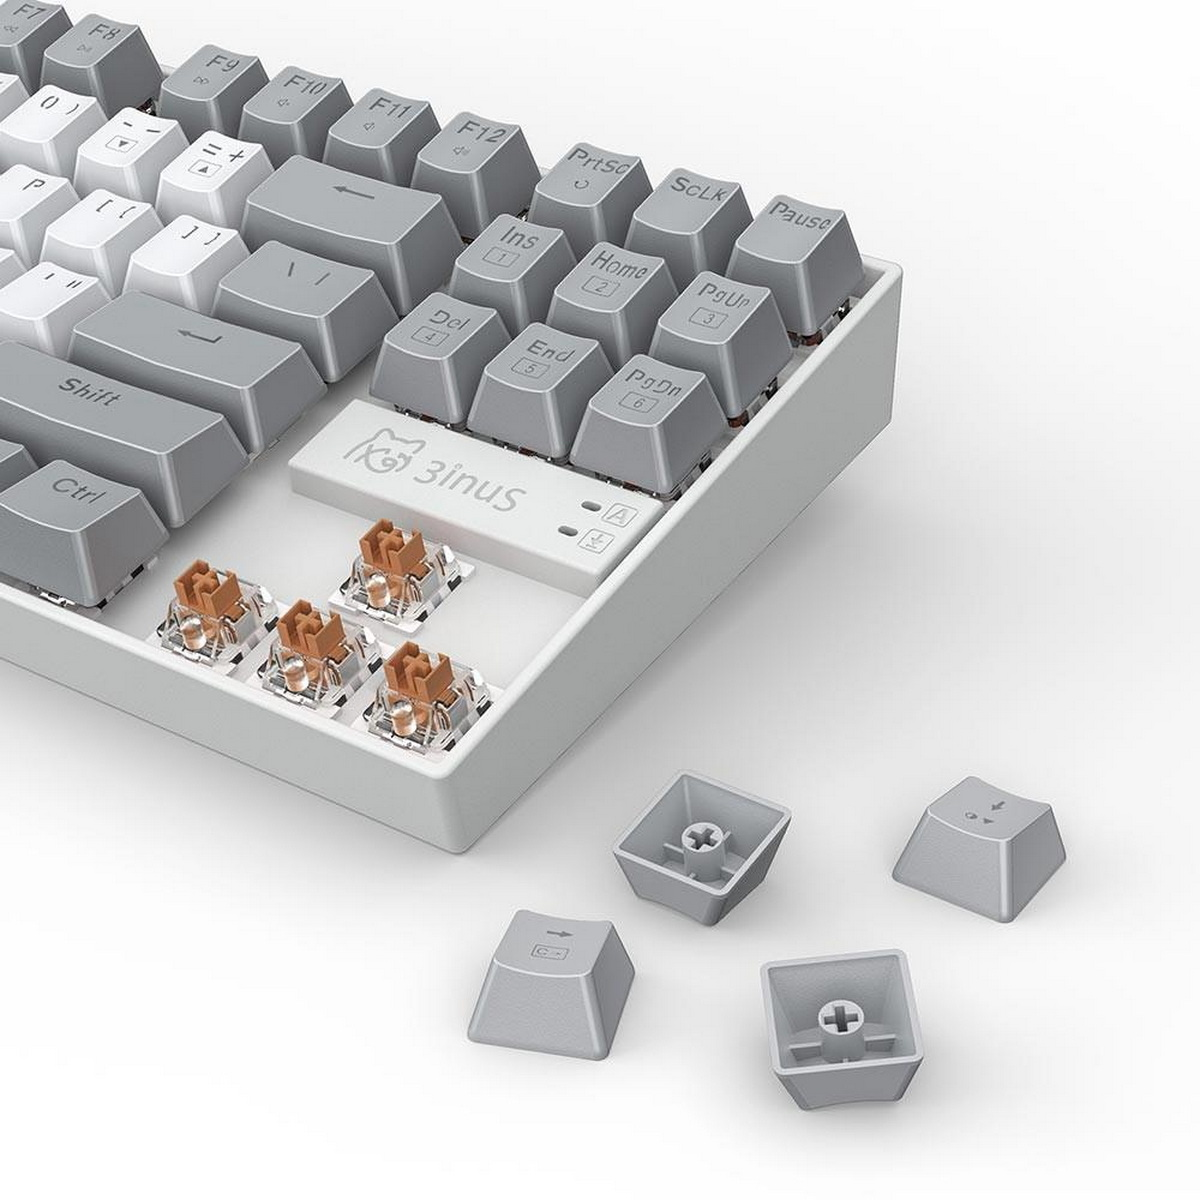 3INUS KEBOHUB braune Tastatur Schalter, Klickende EE01